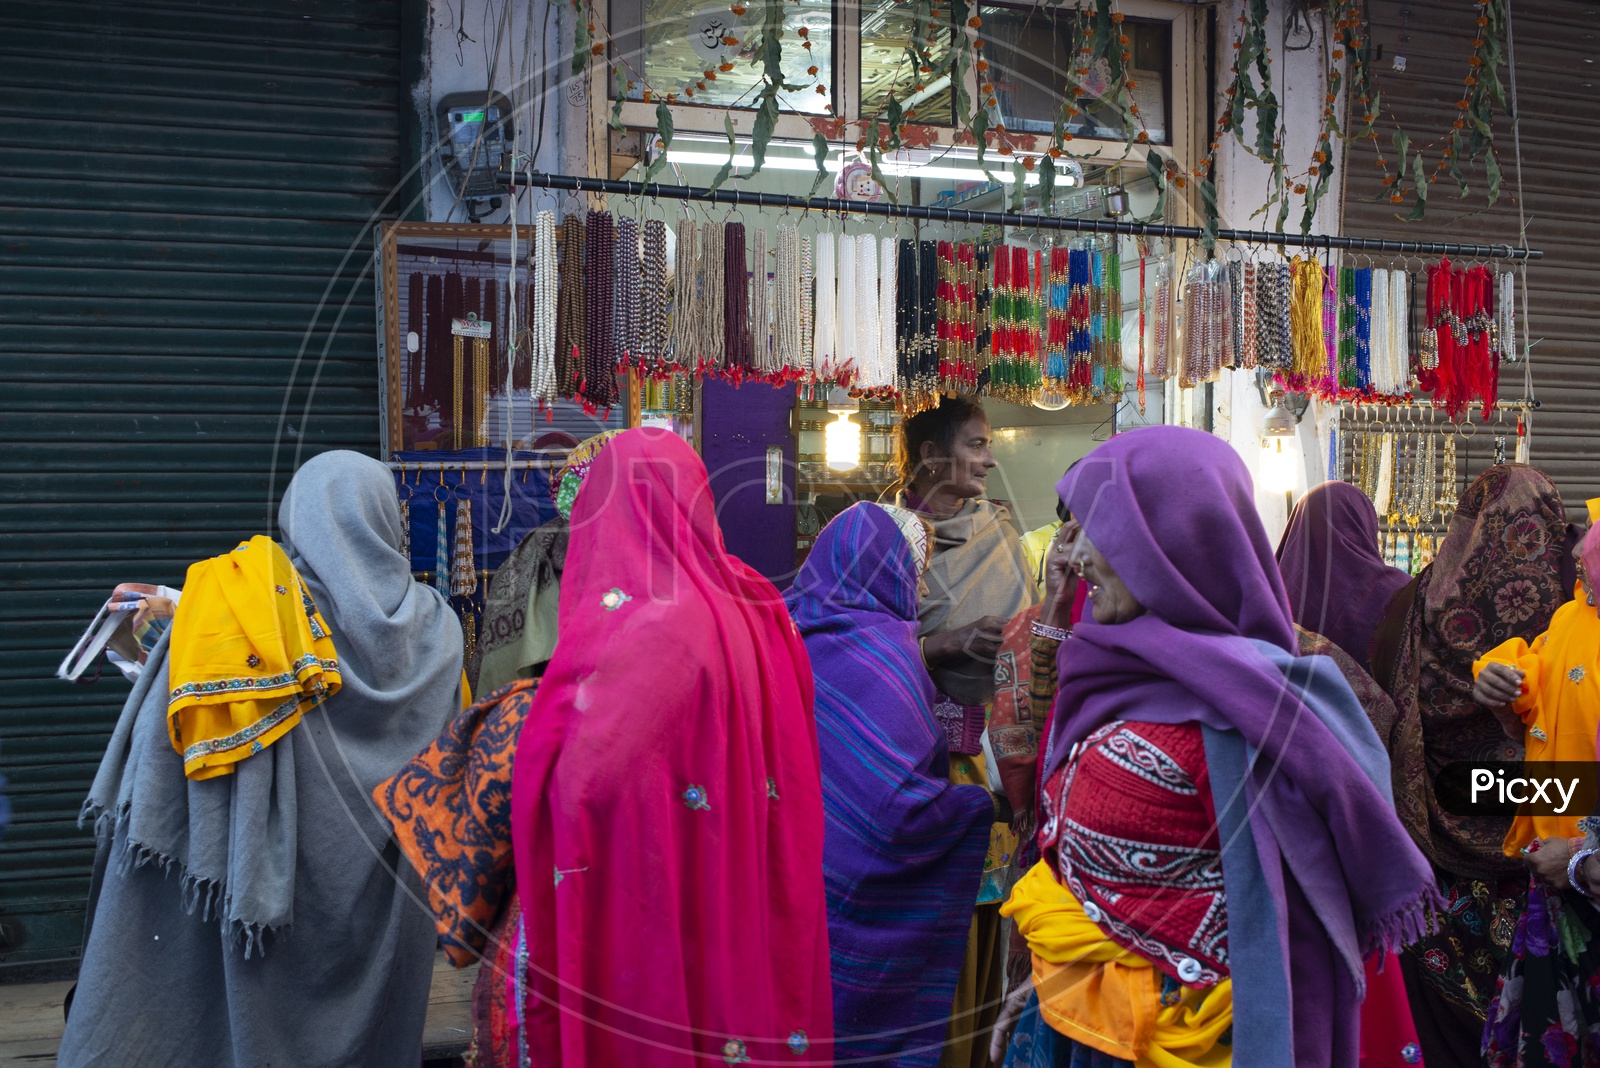 Rajasthani Ladies Shopping at Shop during Pushkar Fair, Rajasthan